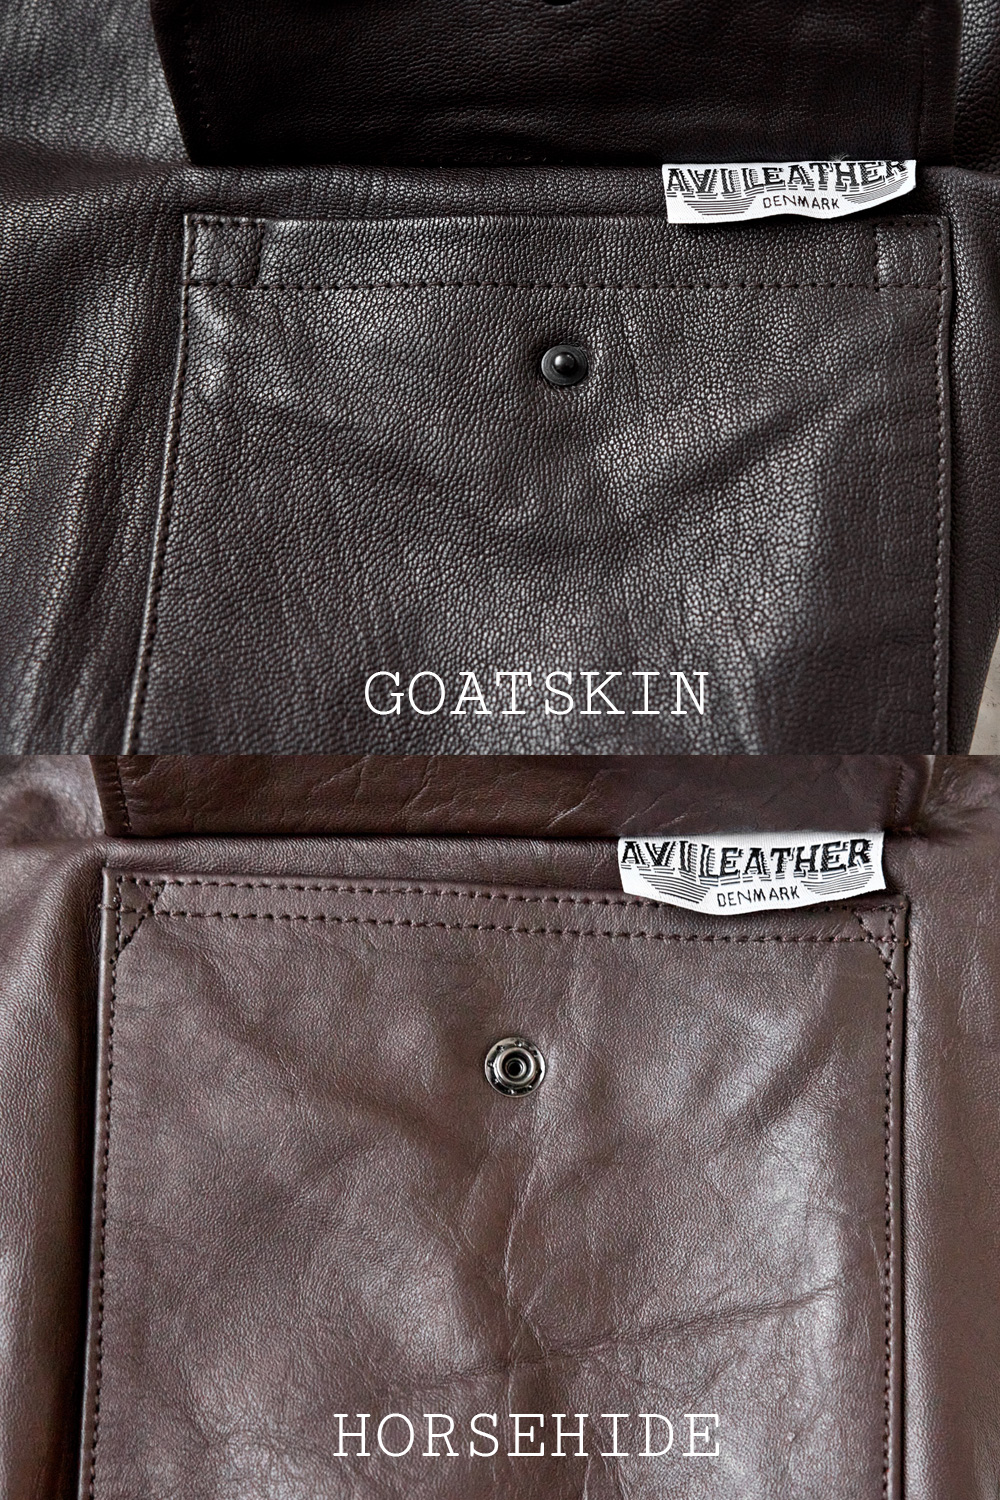 Horsehide and Goatskin Leather Jackets - AVI LEATHER